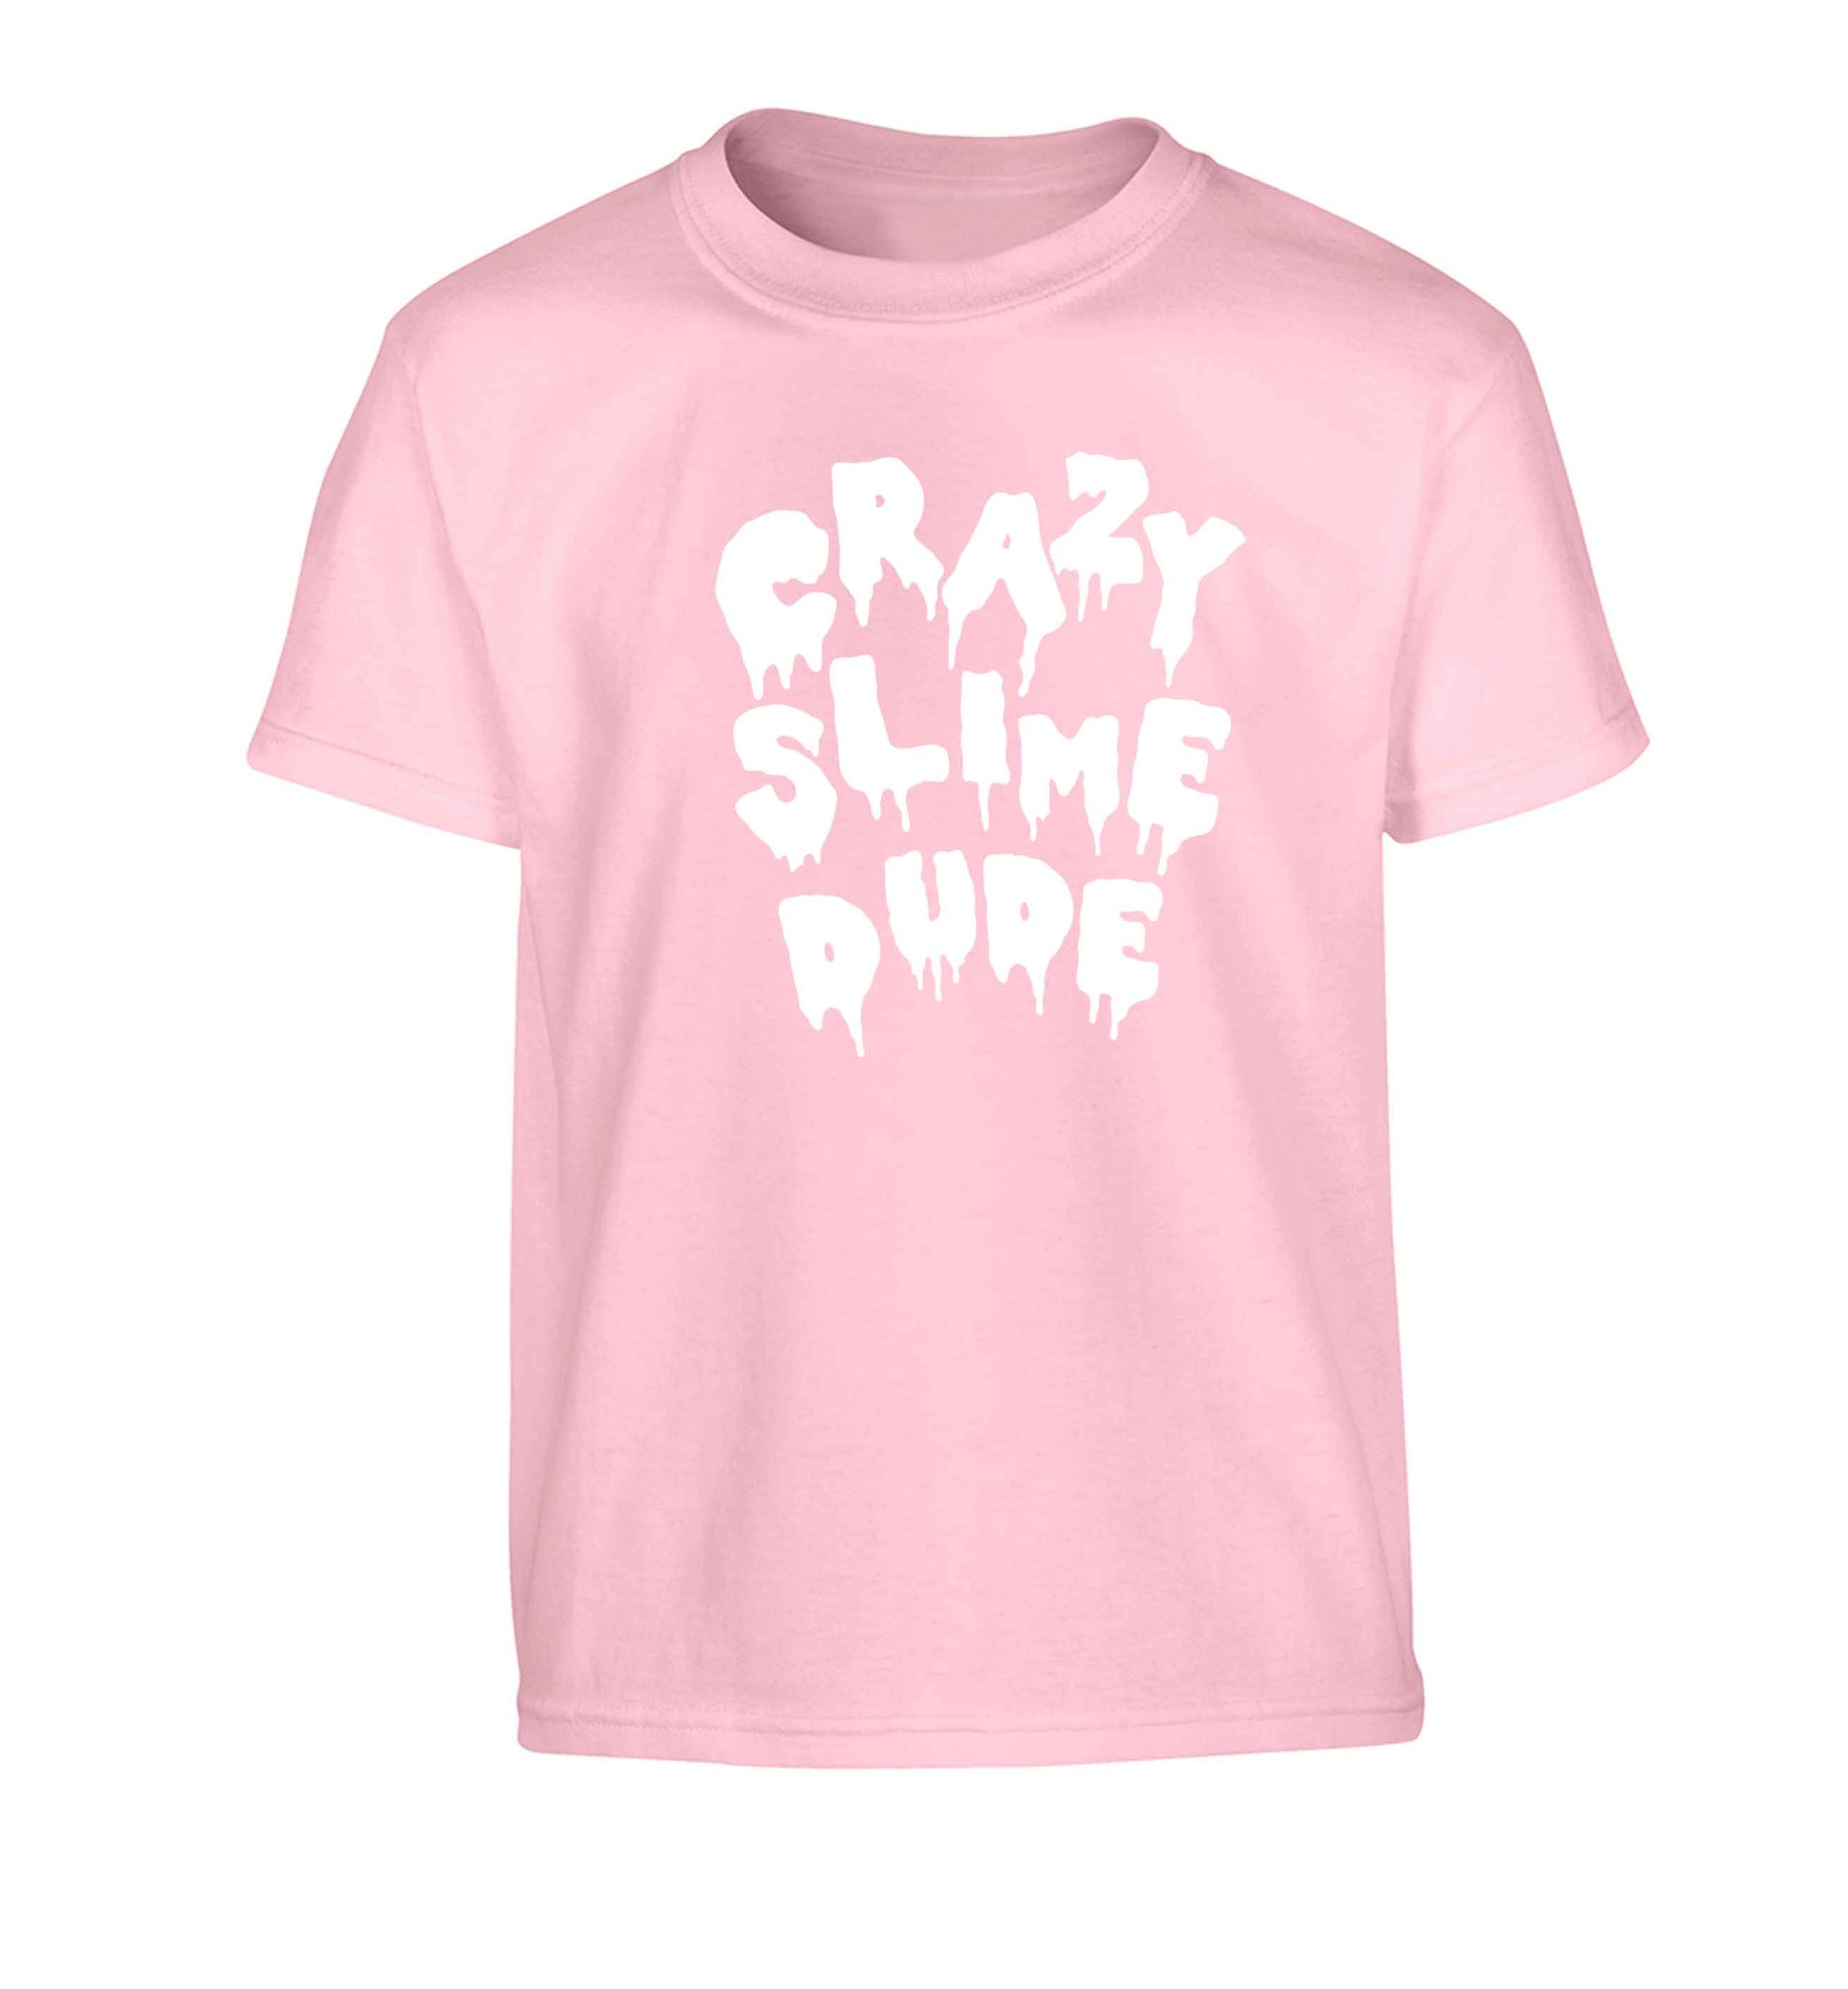 Crazy slime dude Children's light pink Tshirt 12-13 Years